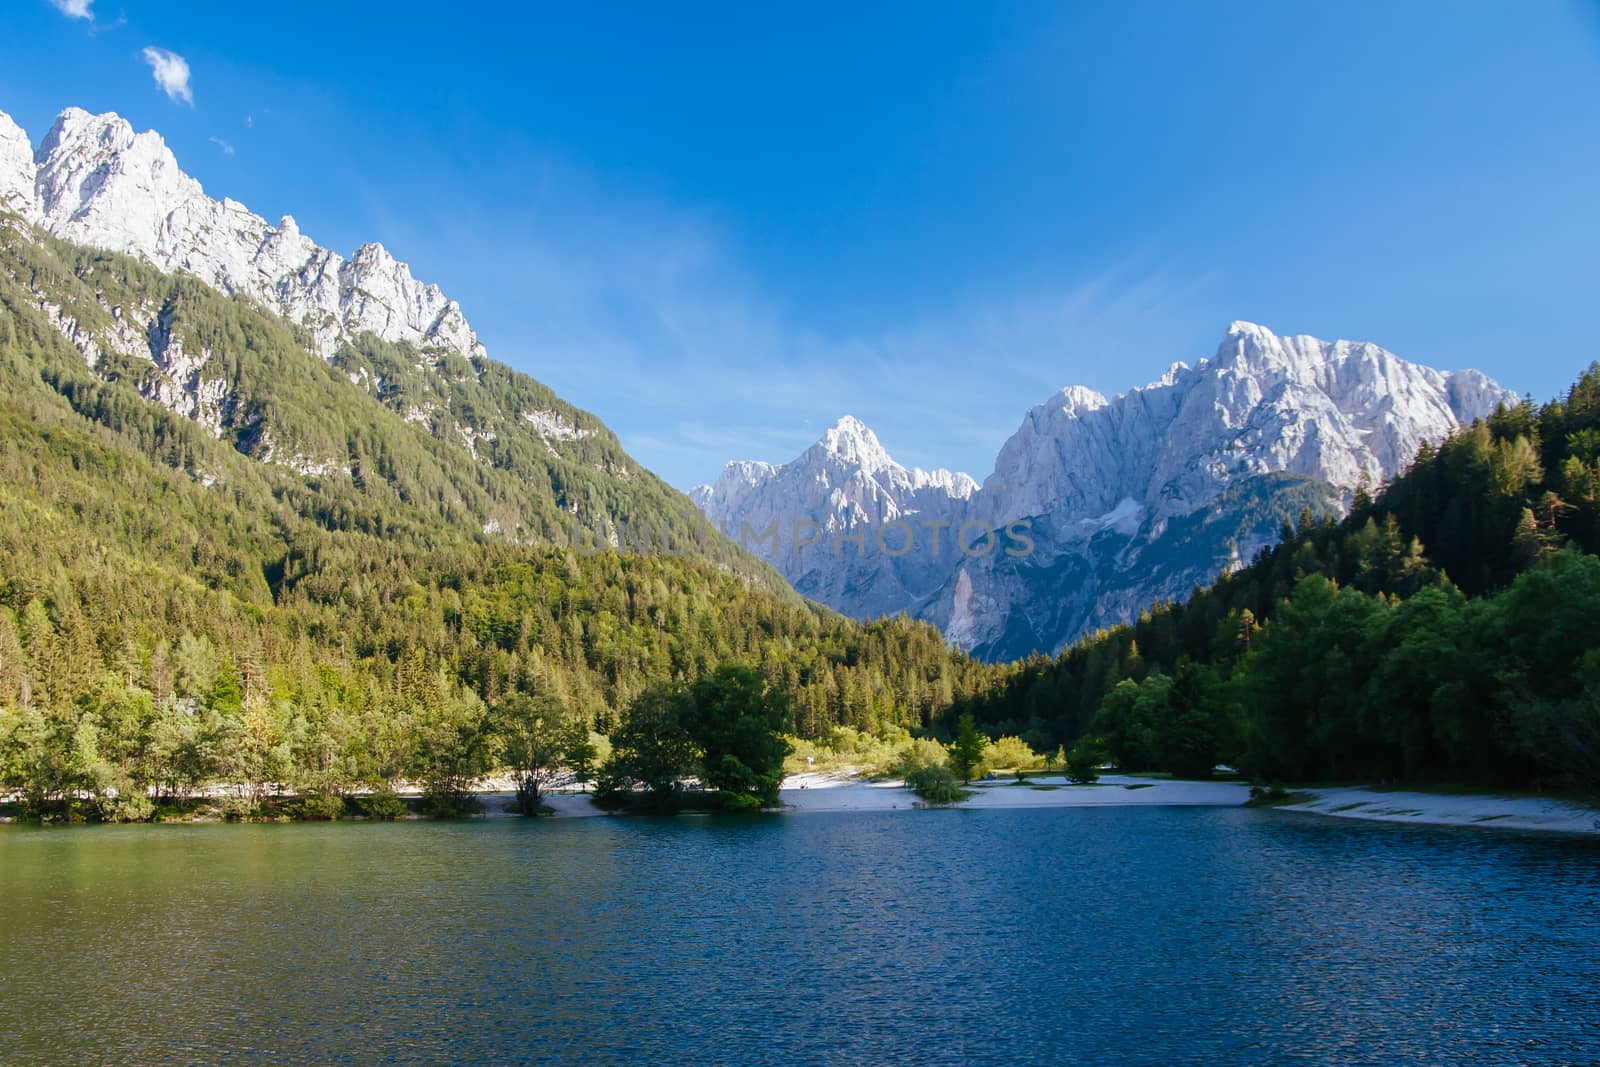 Scenic Landscape near the Vrsic Pass in Slovenia by FiledIMAGE